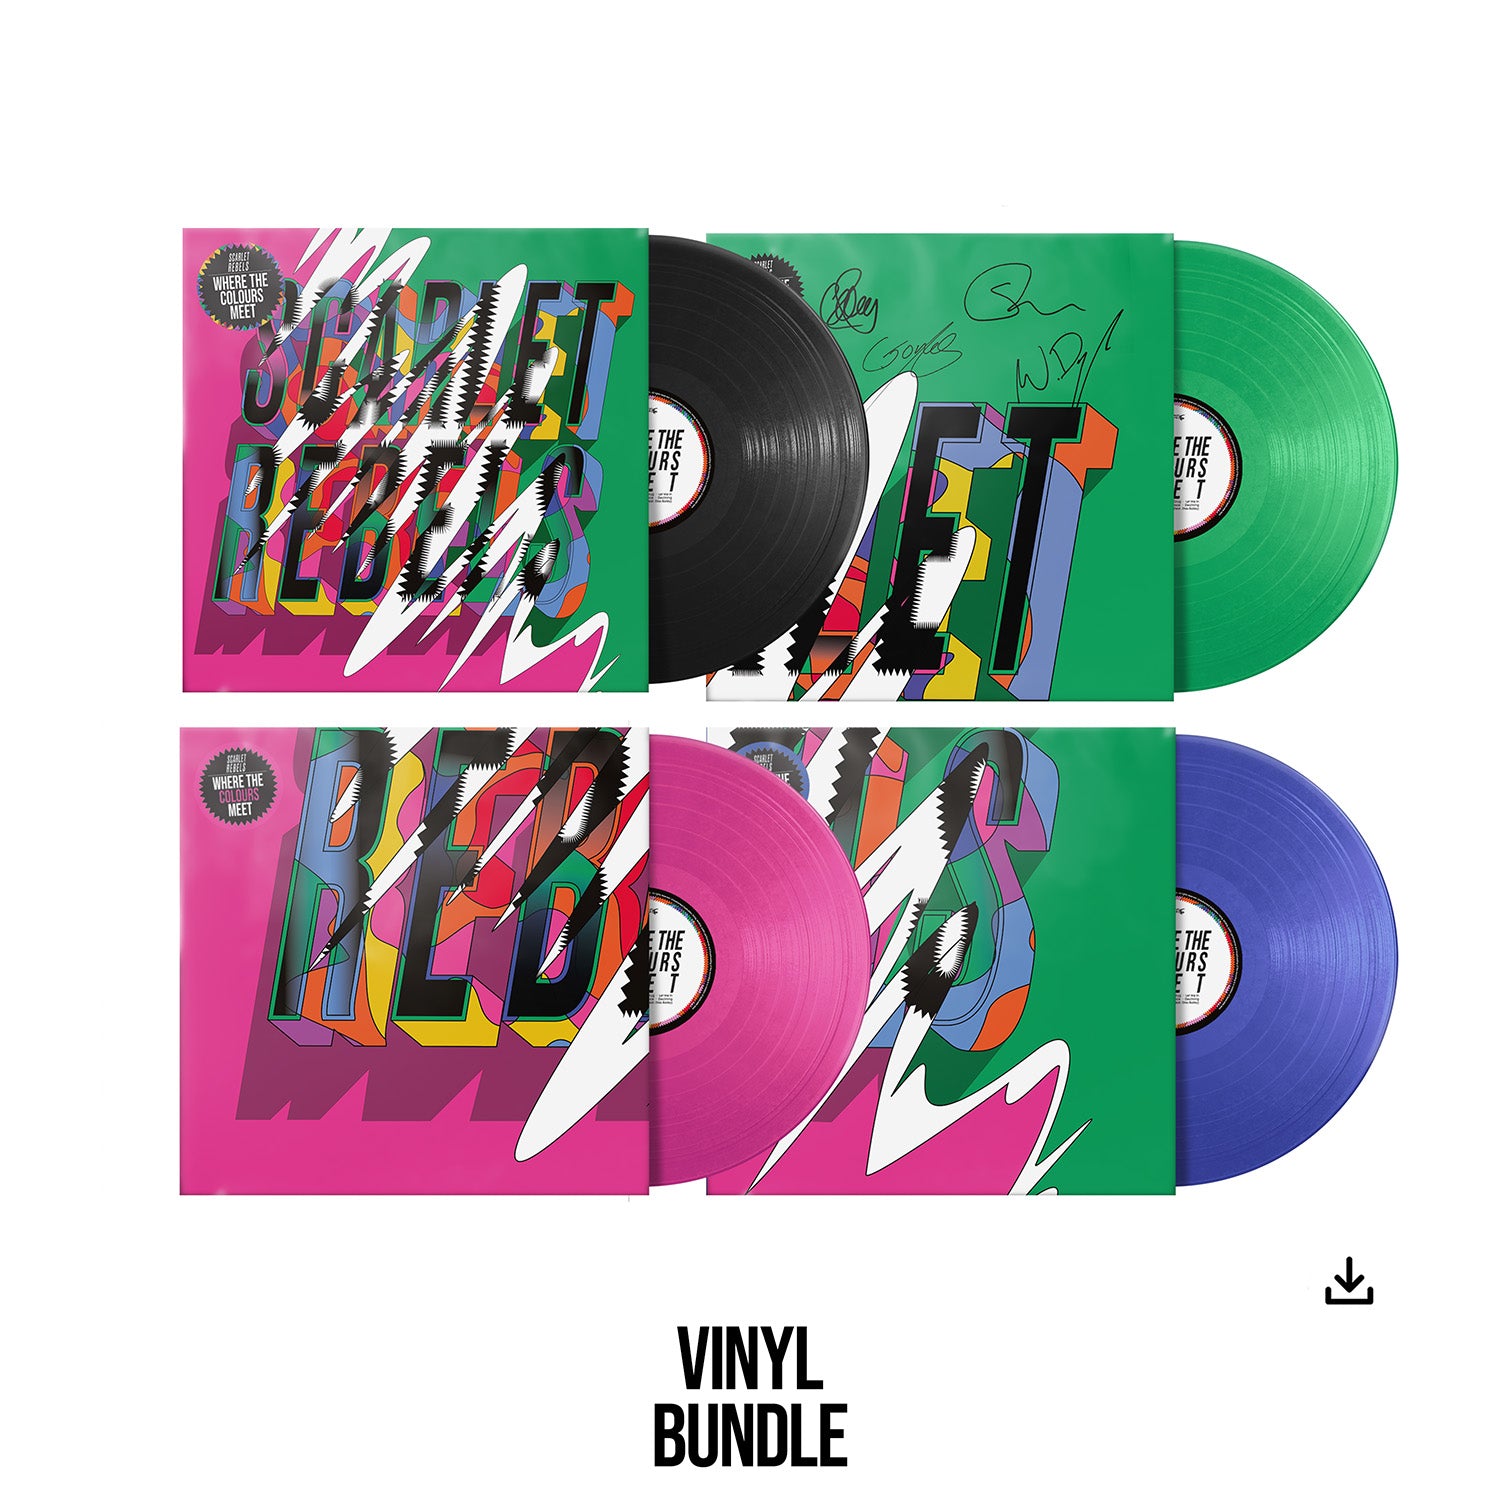 Scarlet Rebels "Where The Colours Meet" Vinyl Bundle - Pink, Green, Blue & Black Vinyl inc. Download - PRE-ORDER